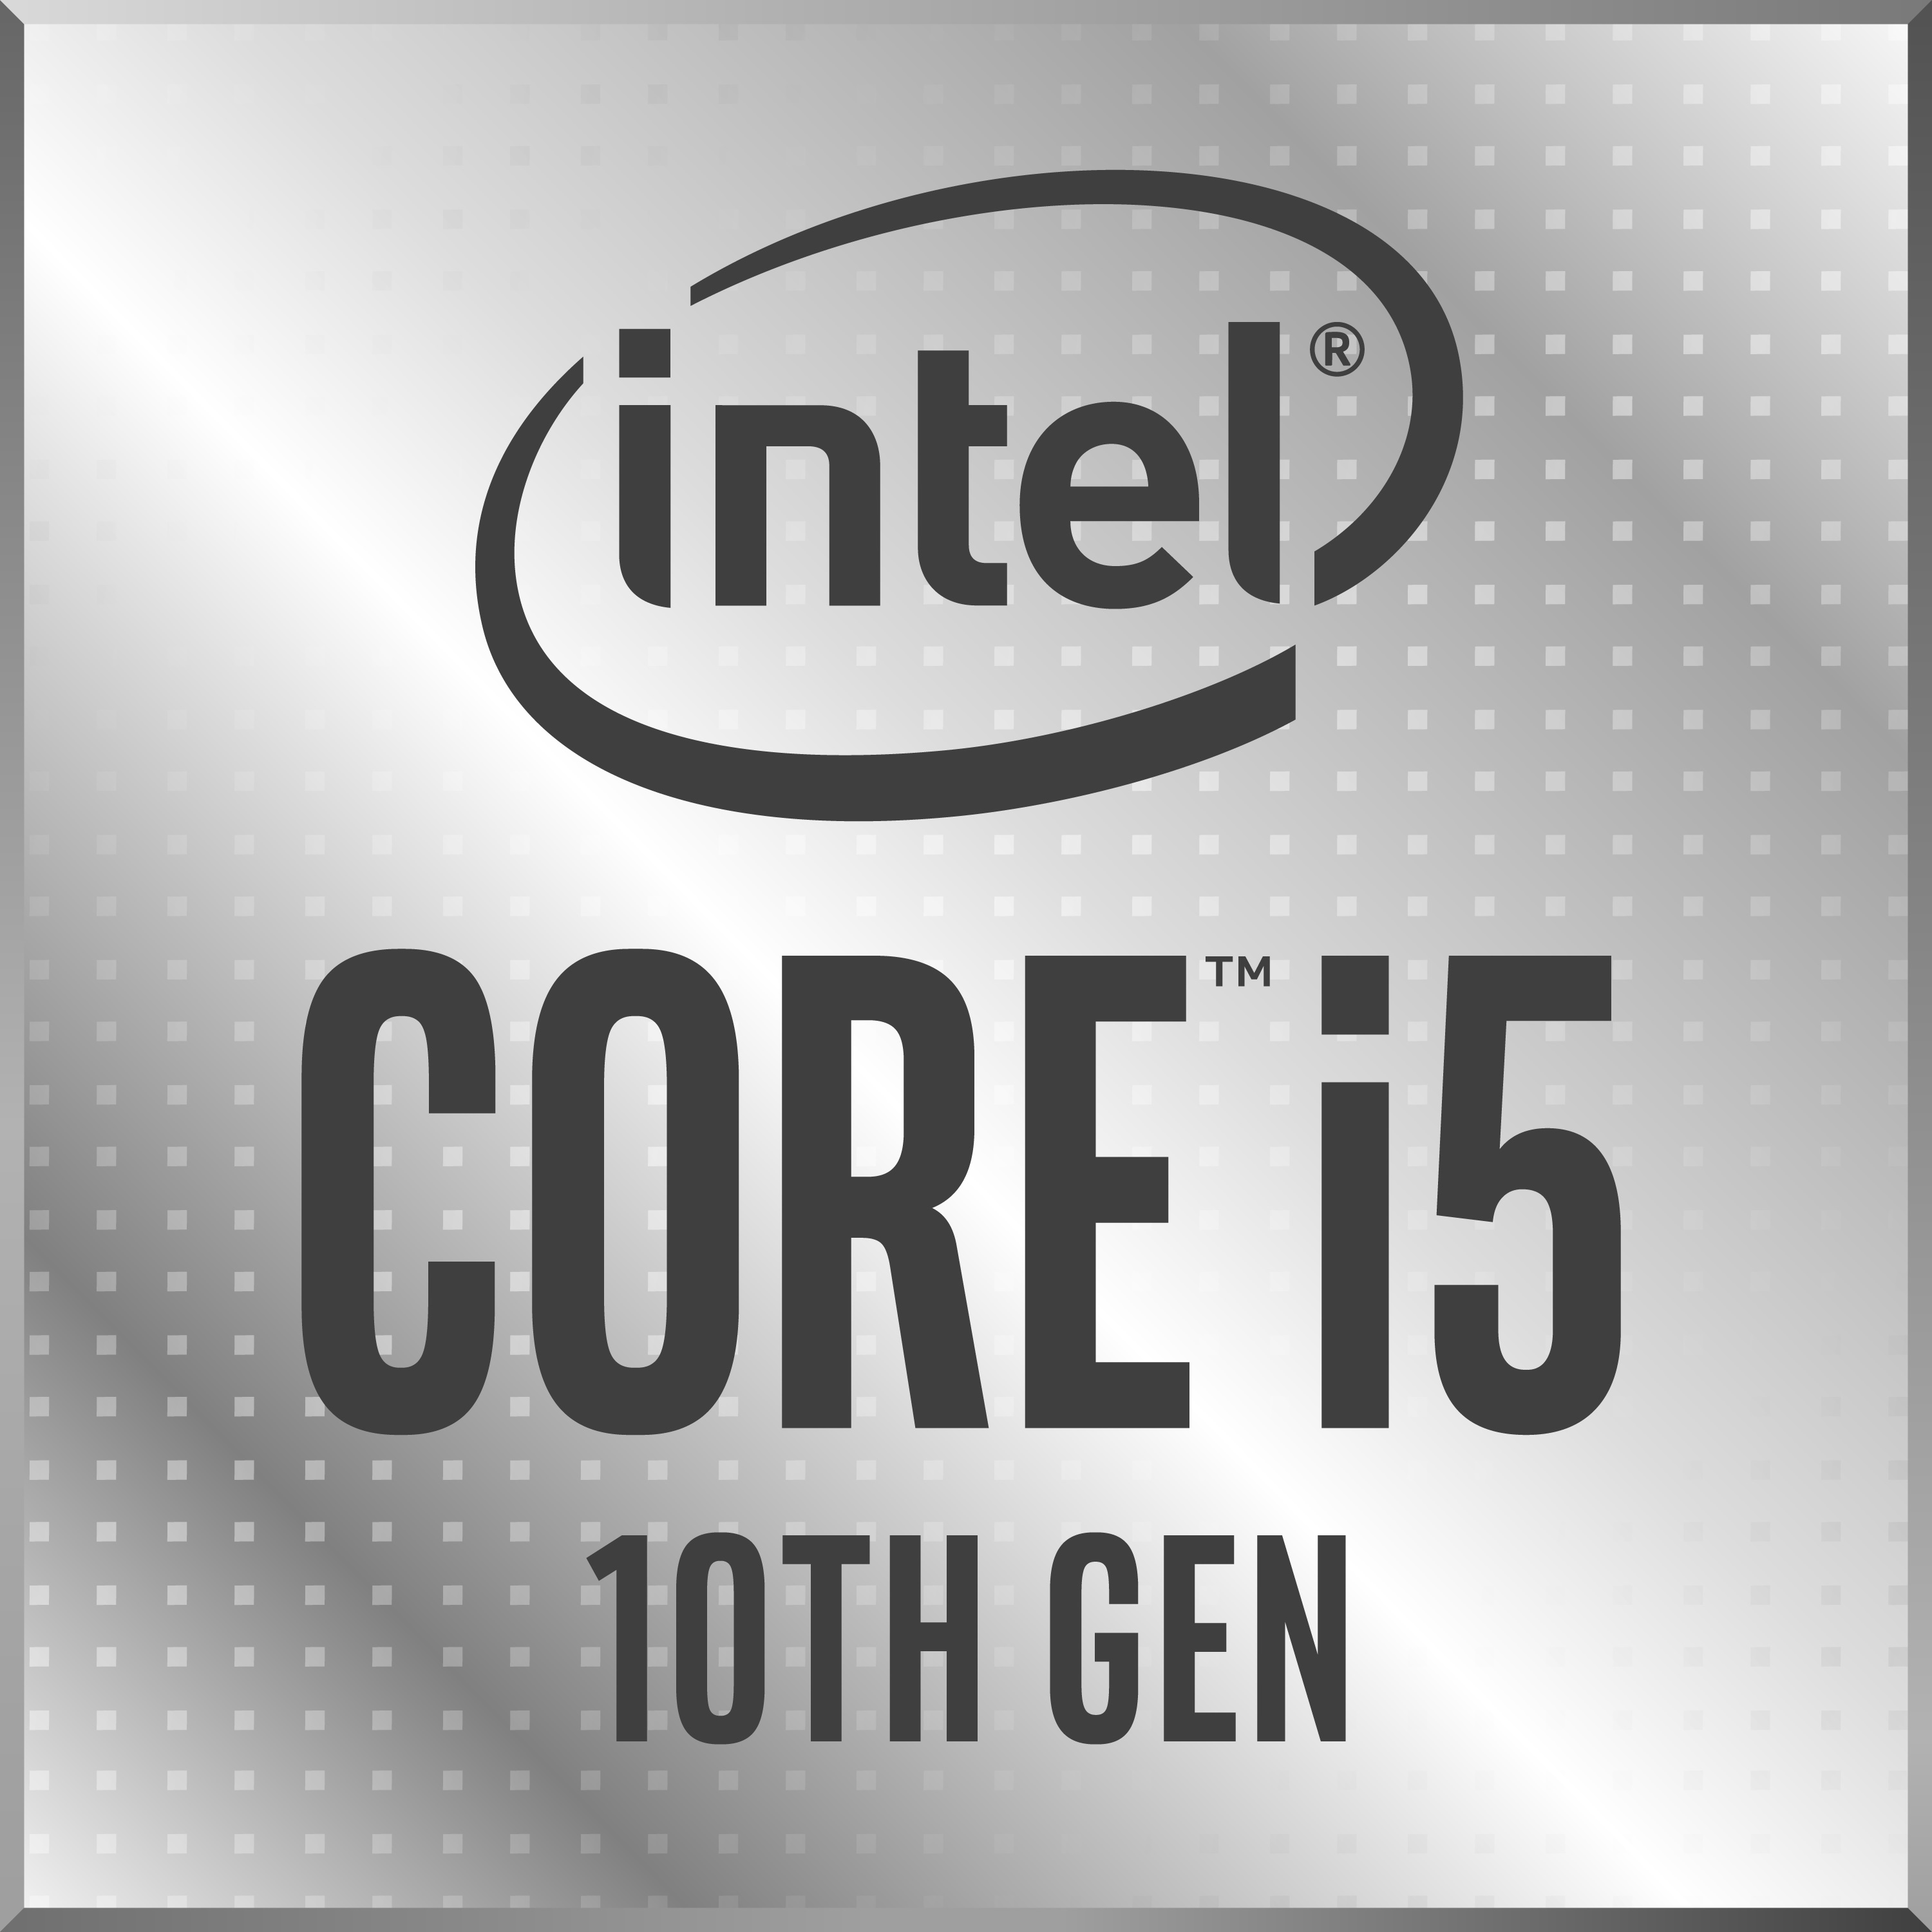 Intel Core i5-1035G1 Processor Lake) - NotebookCheck.net Tech